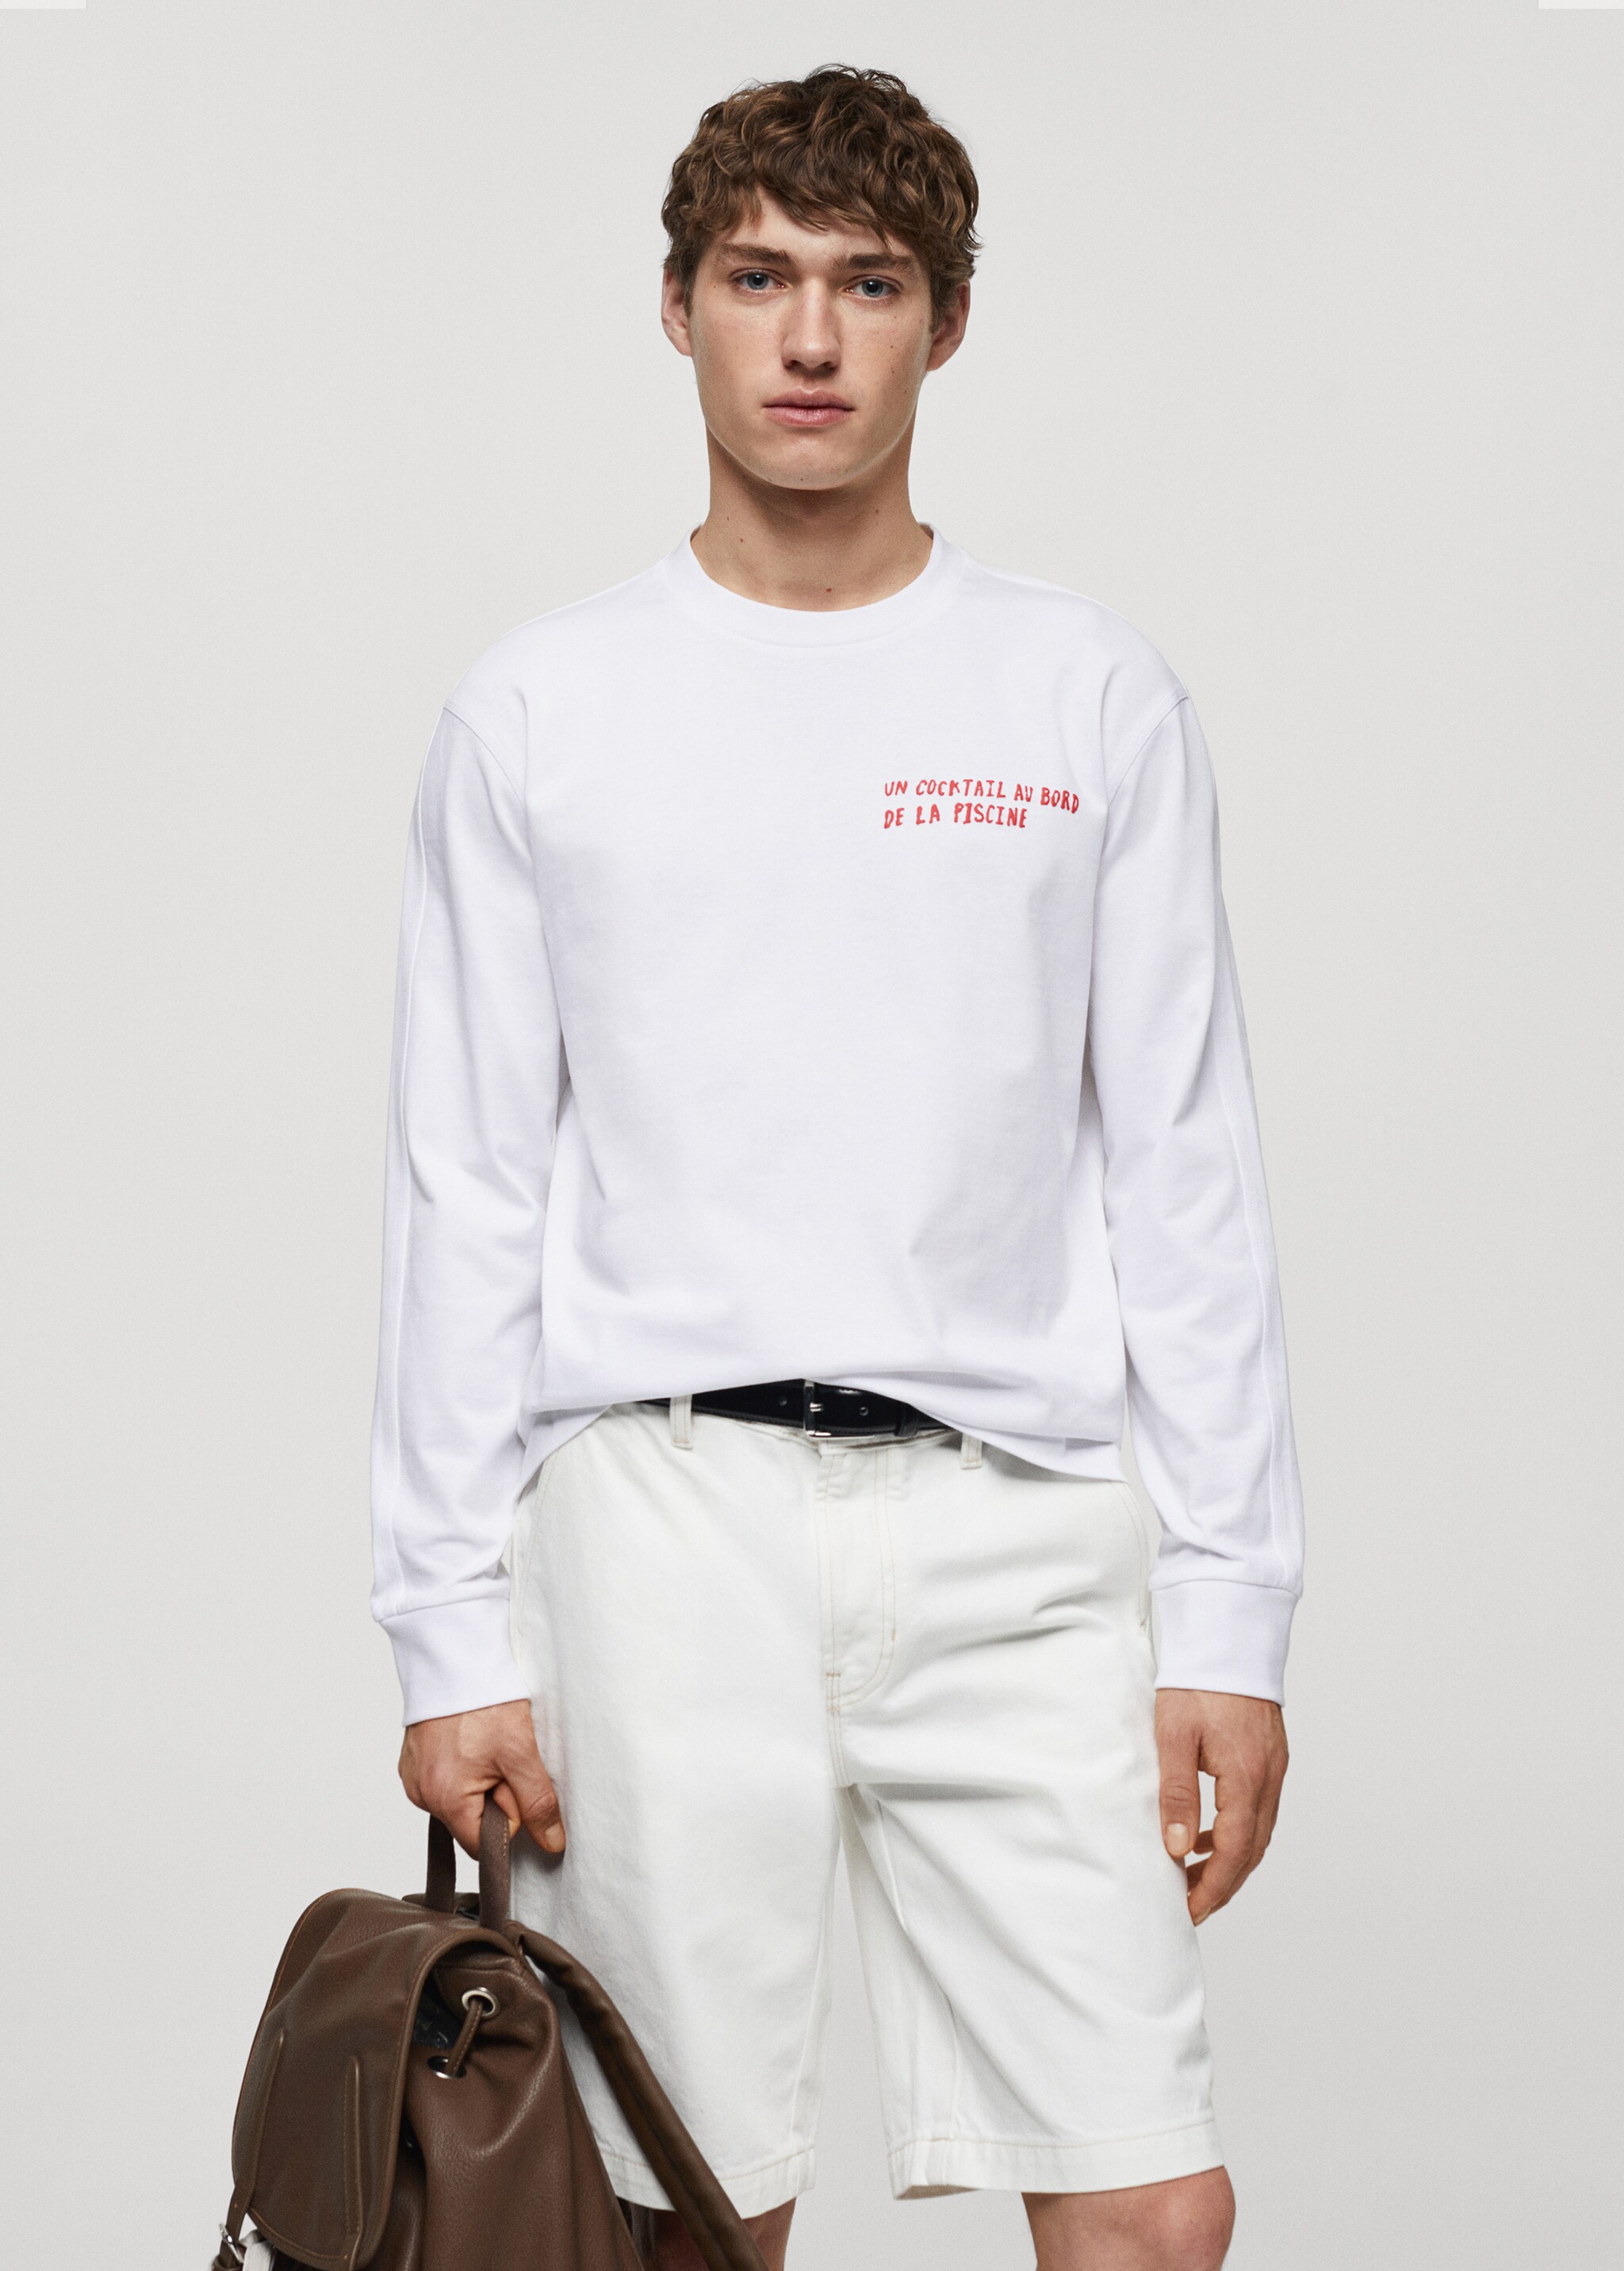 100% cotton sweatshirt with printed drawing - Medium plane